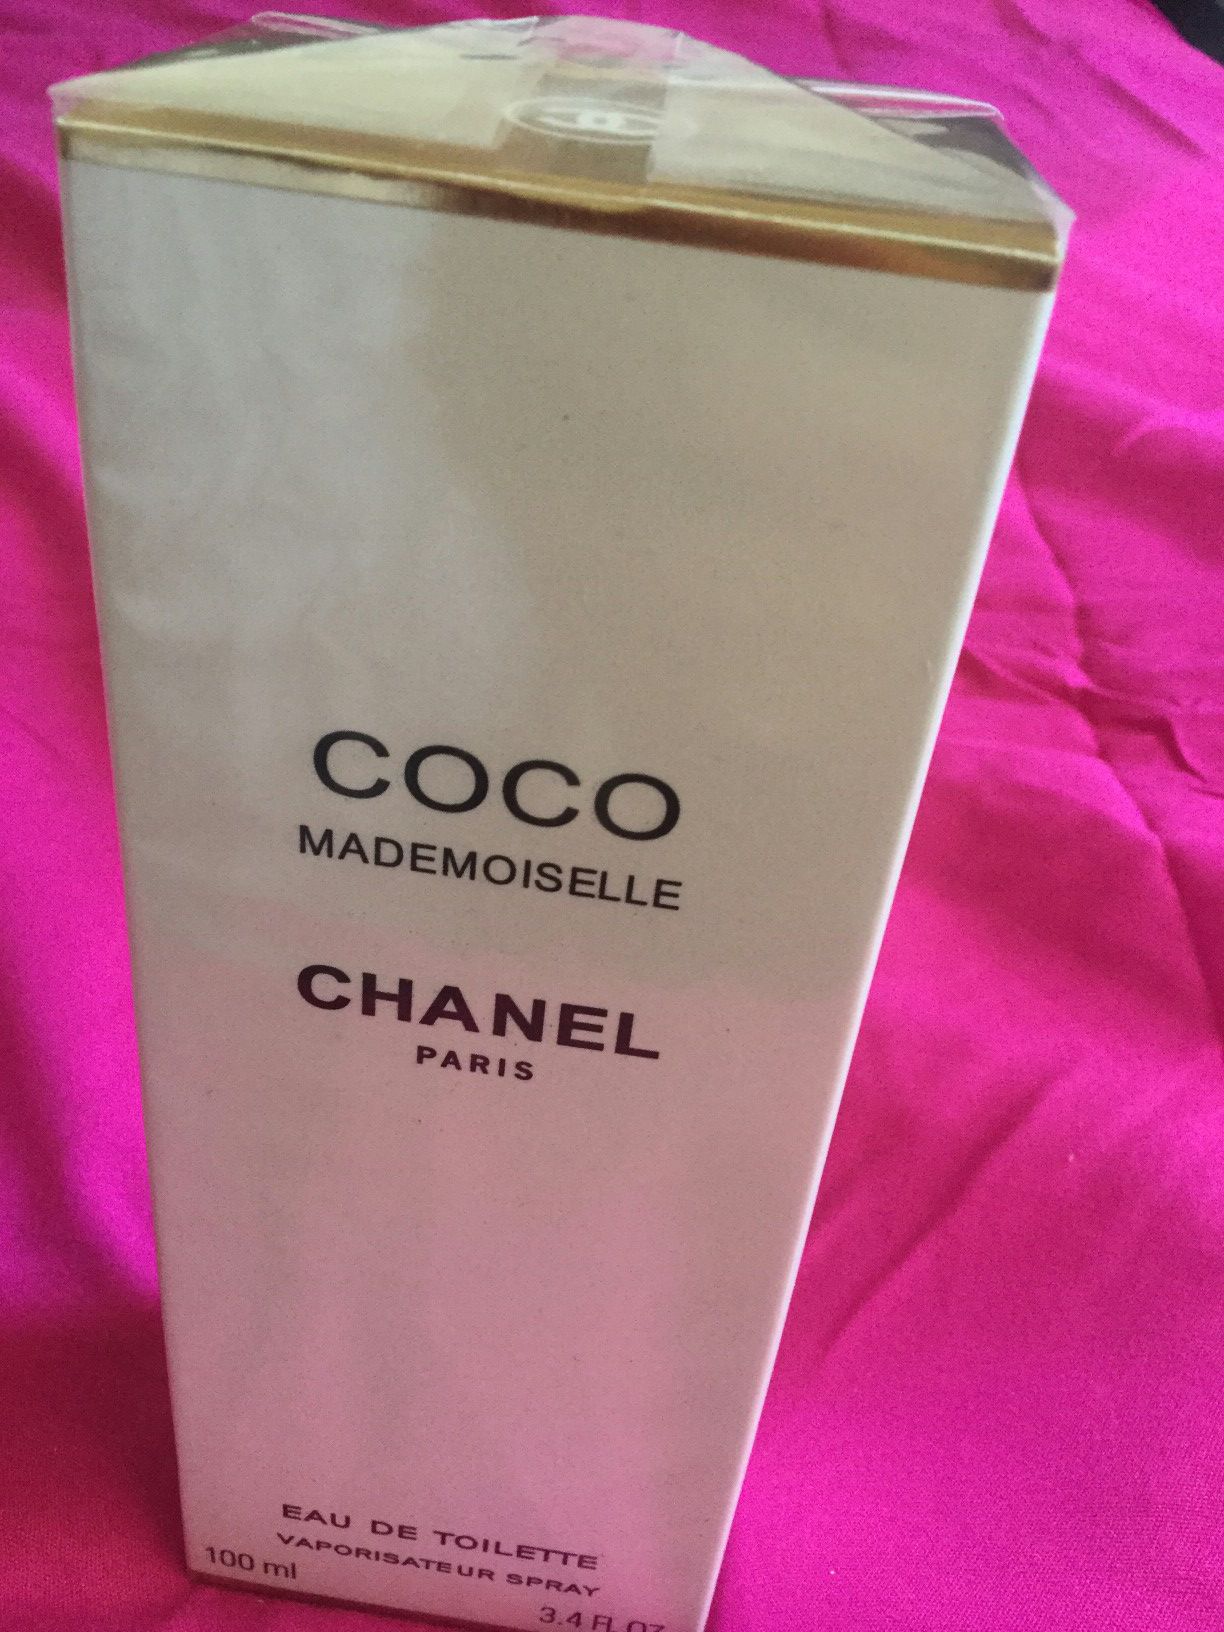 COCO Chanel perfume